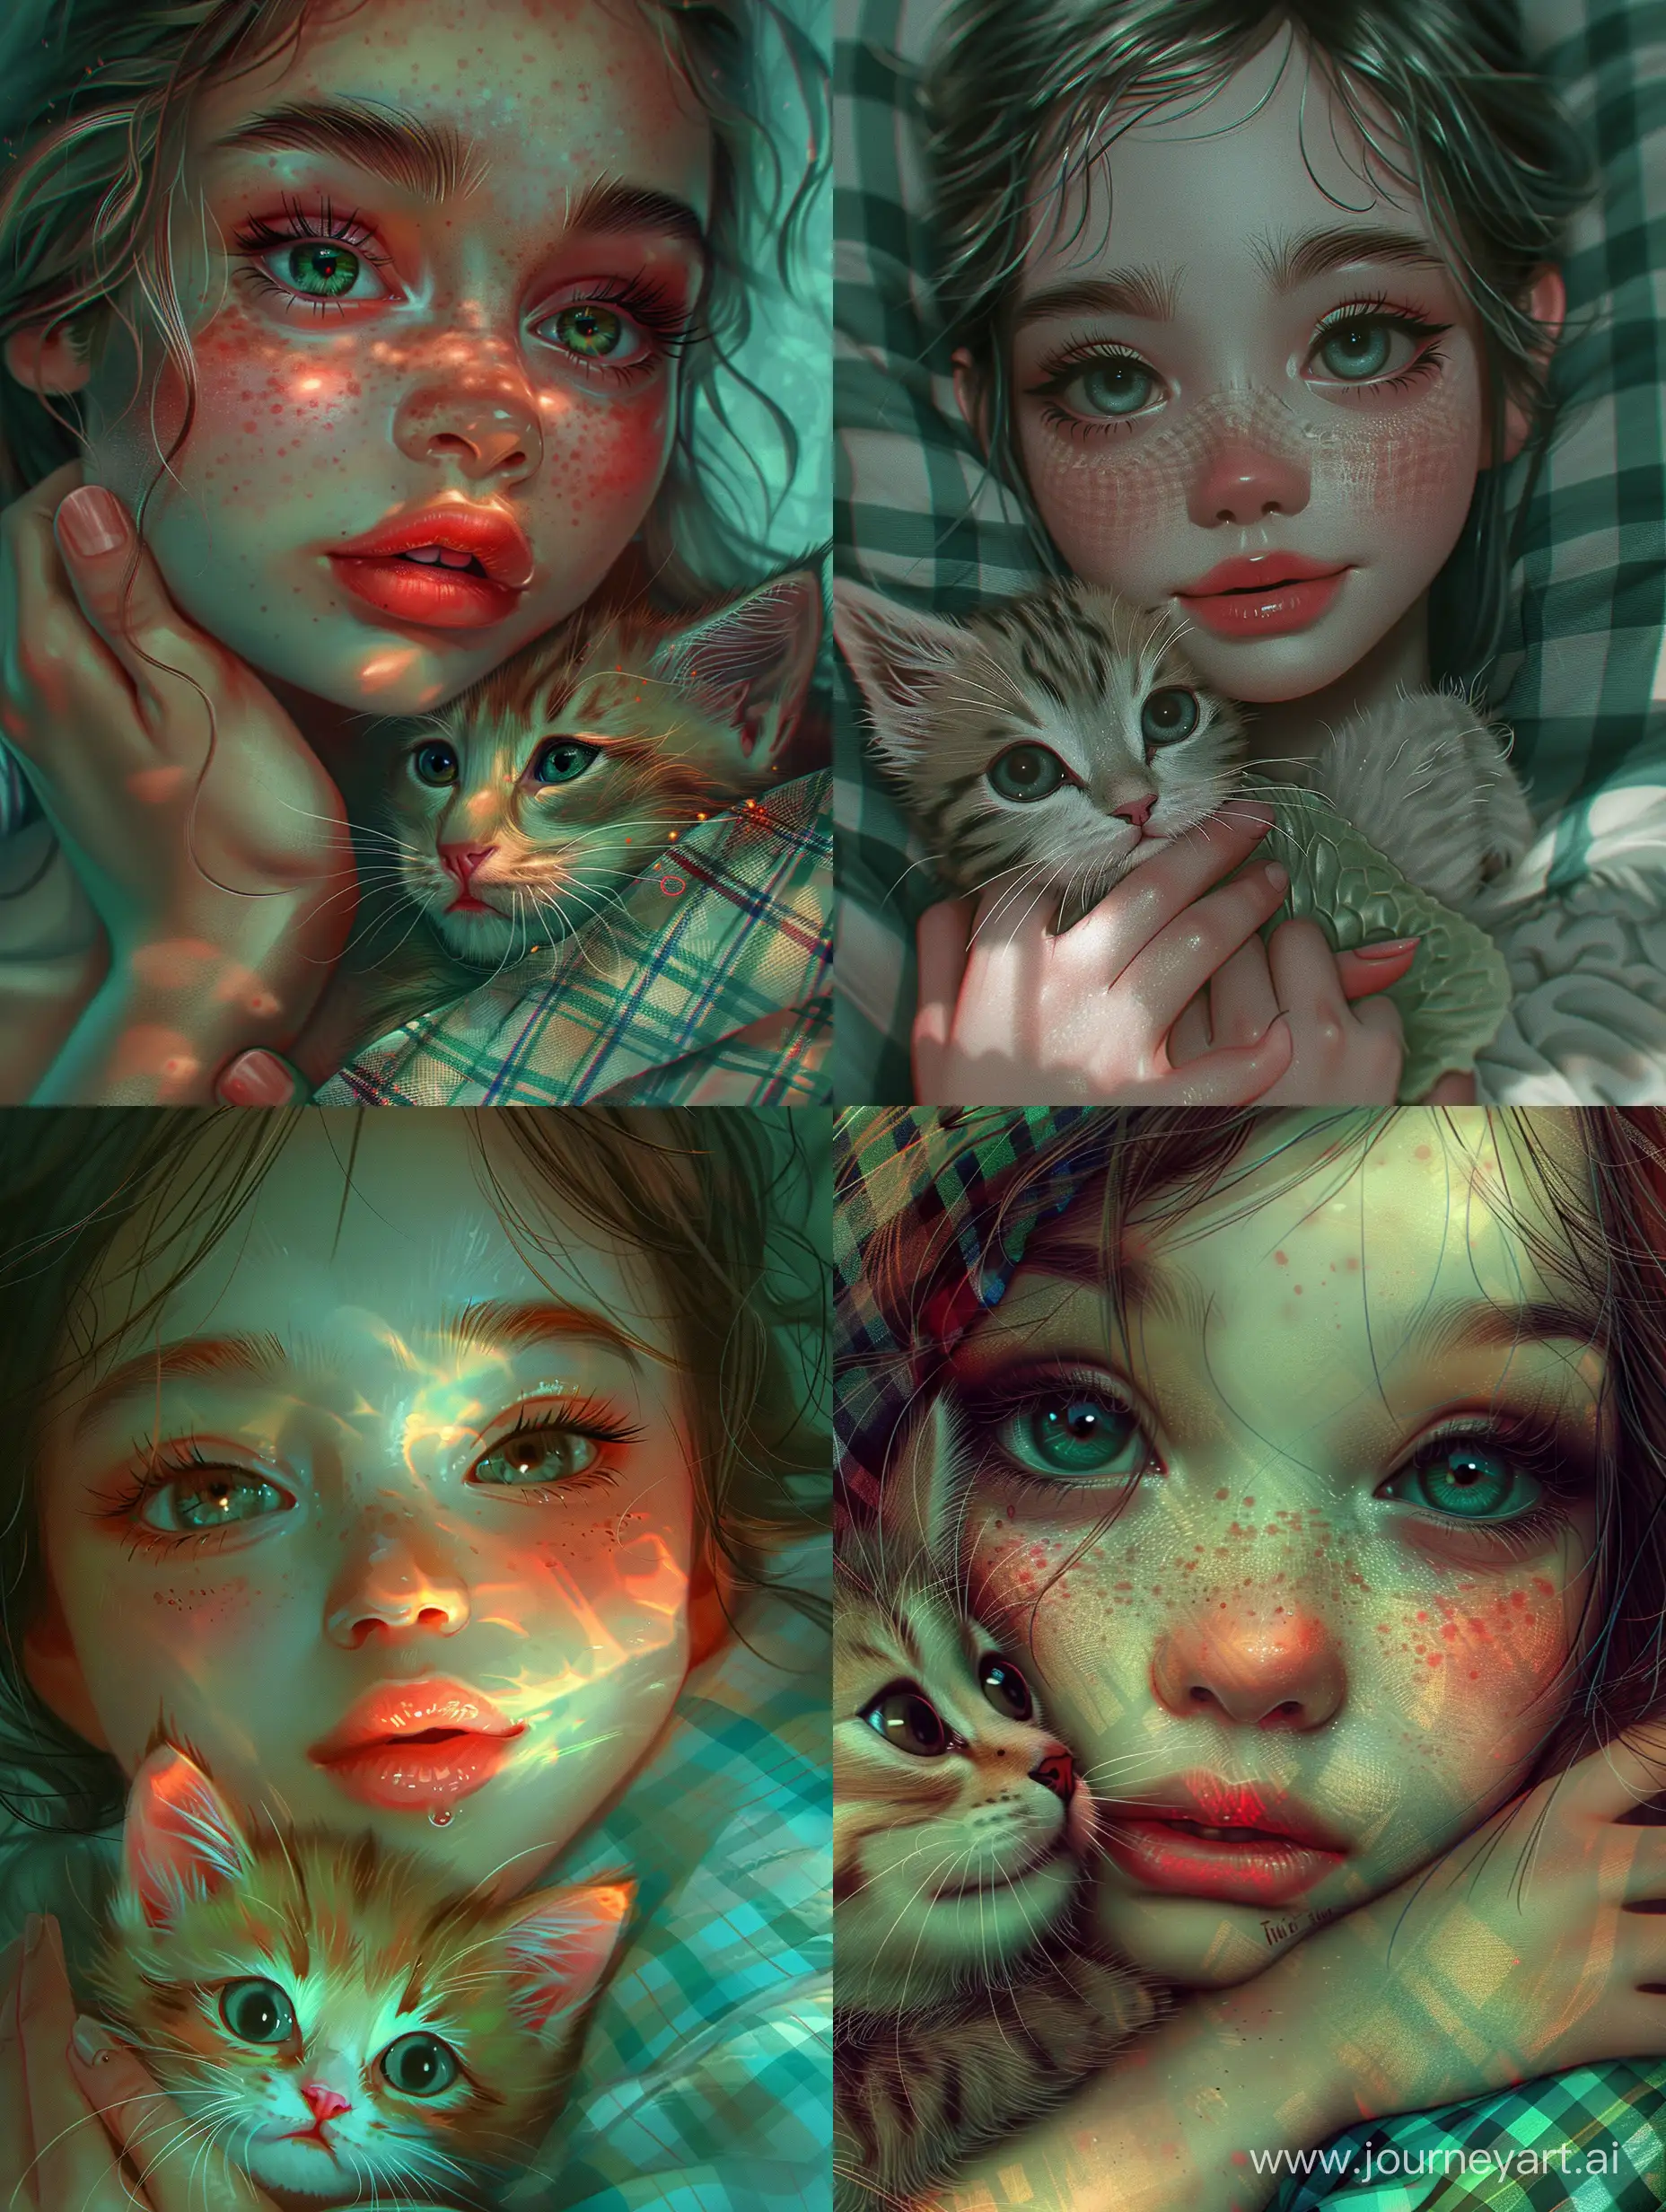 Tim-BurtonInspired-Digital-Illustration-Beautiful-Girl-Embracing-a-Kitten-in-Delicate-Colors